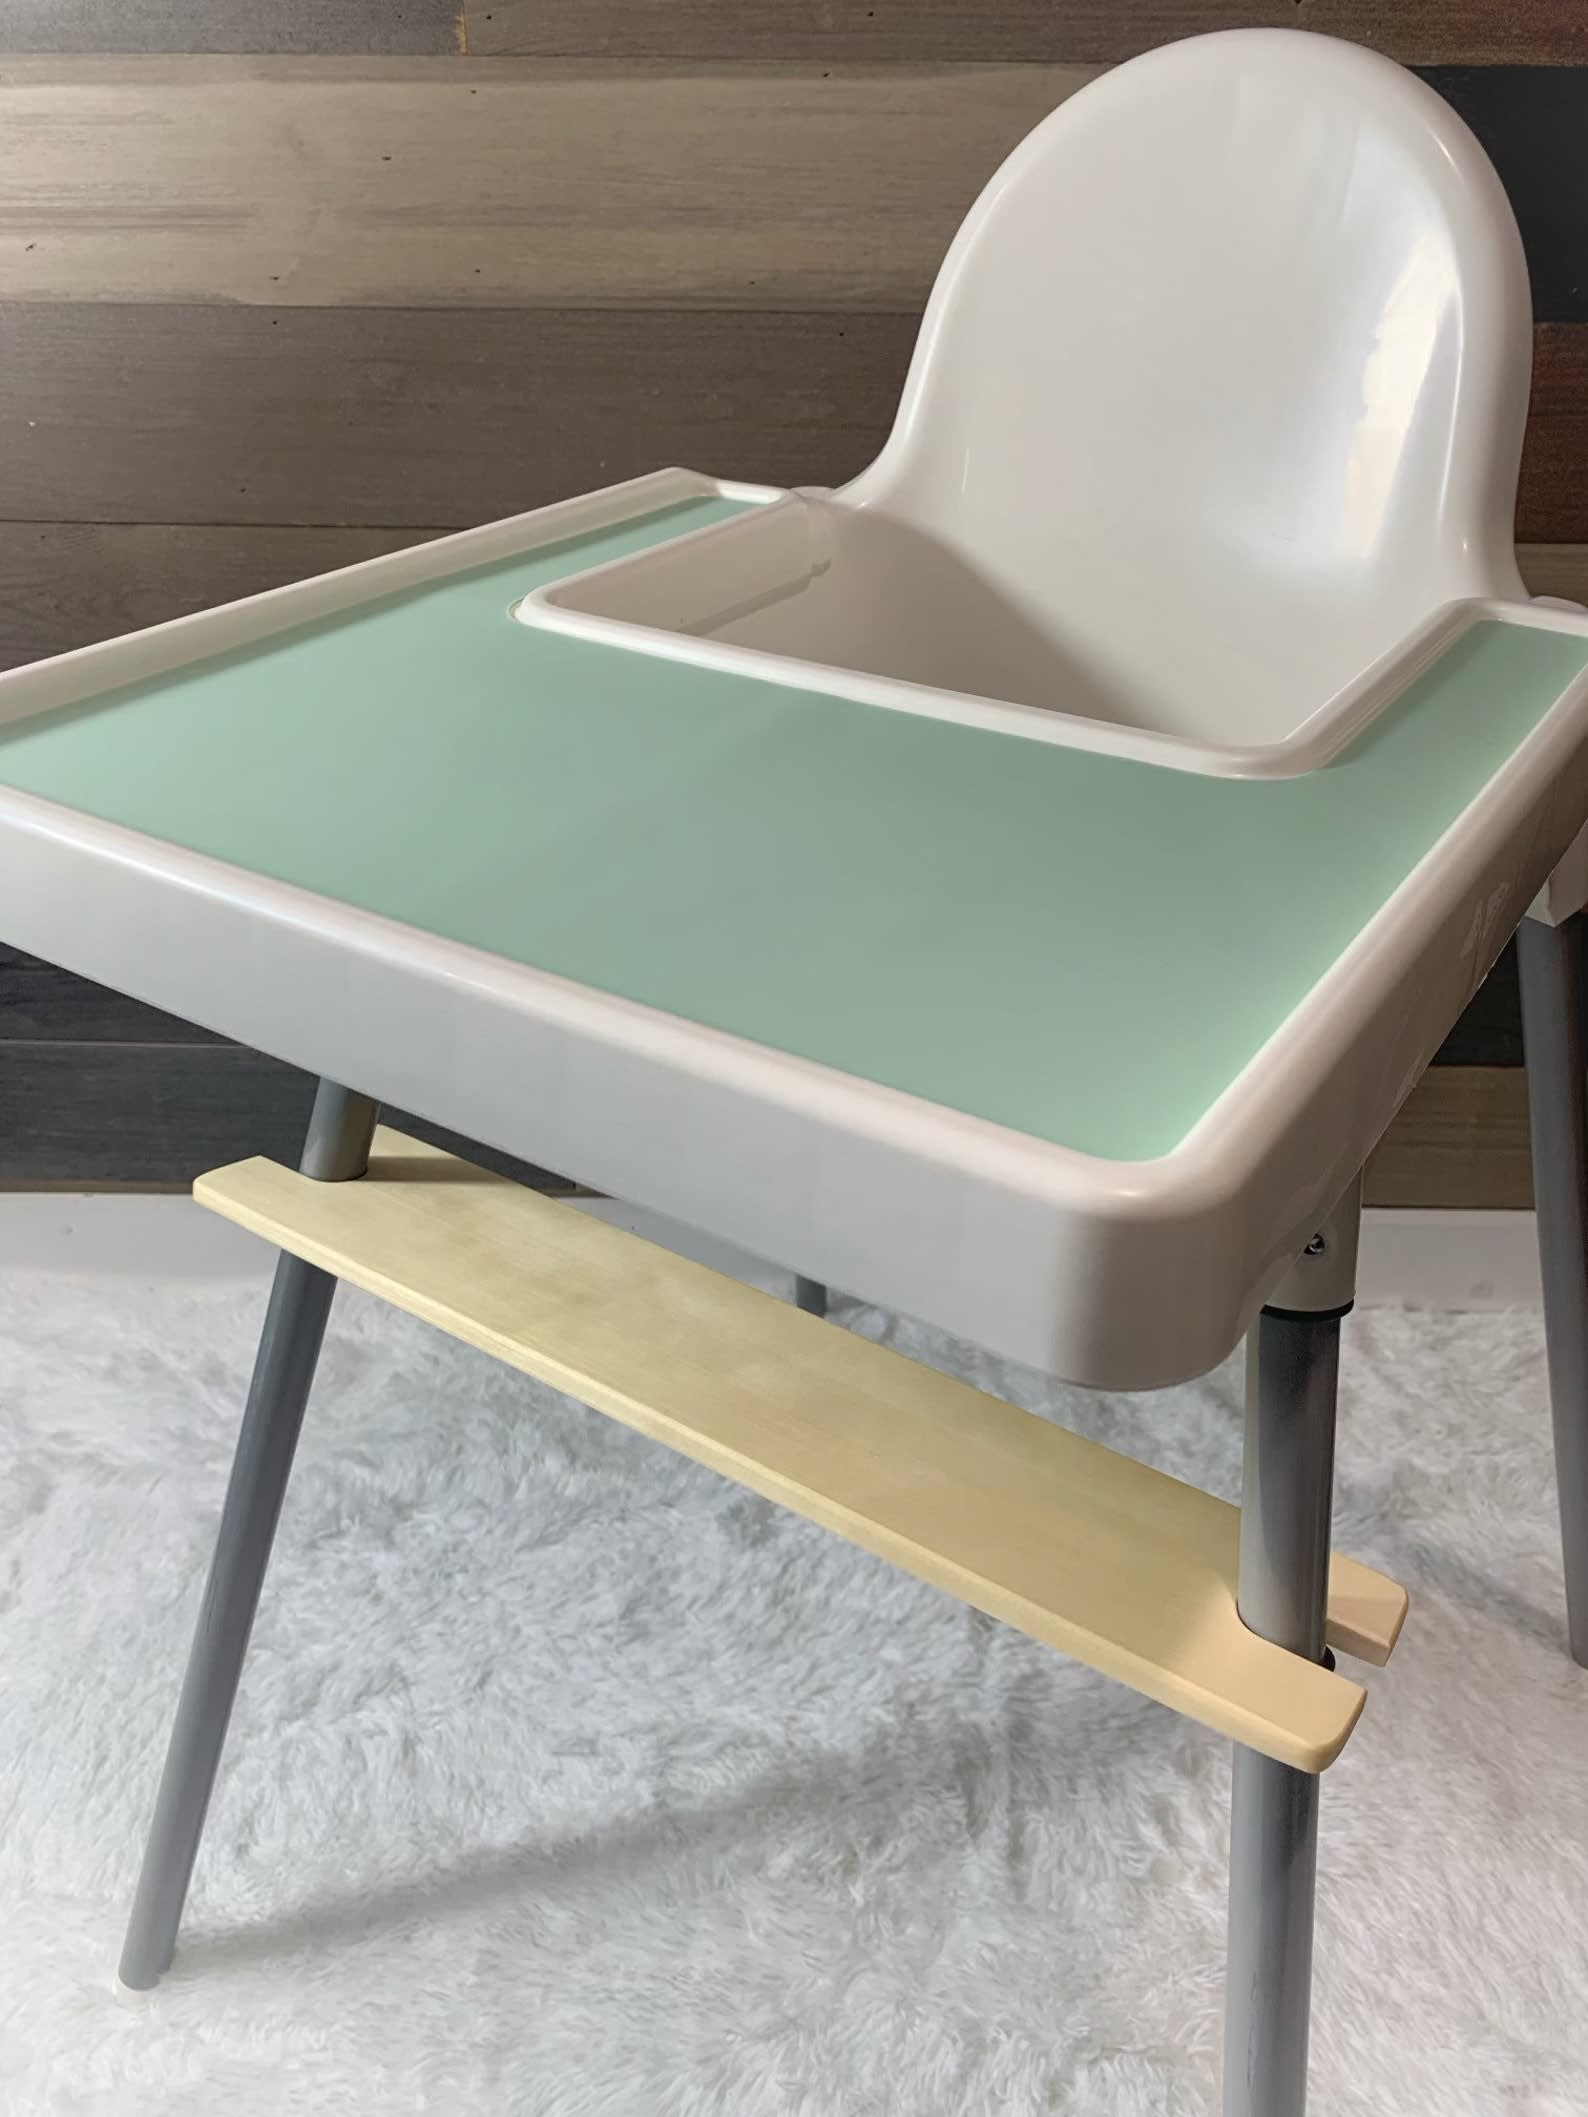 DIY IKEA High Chair Hacks - BLW Antilop High Chair for Baby